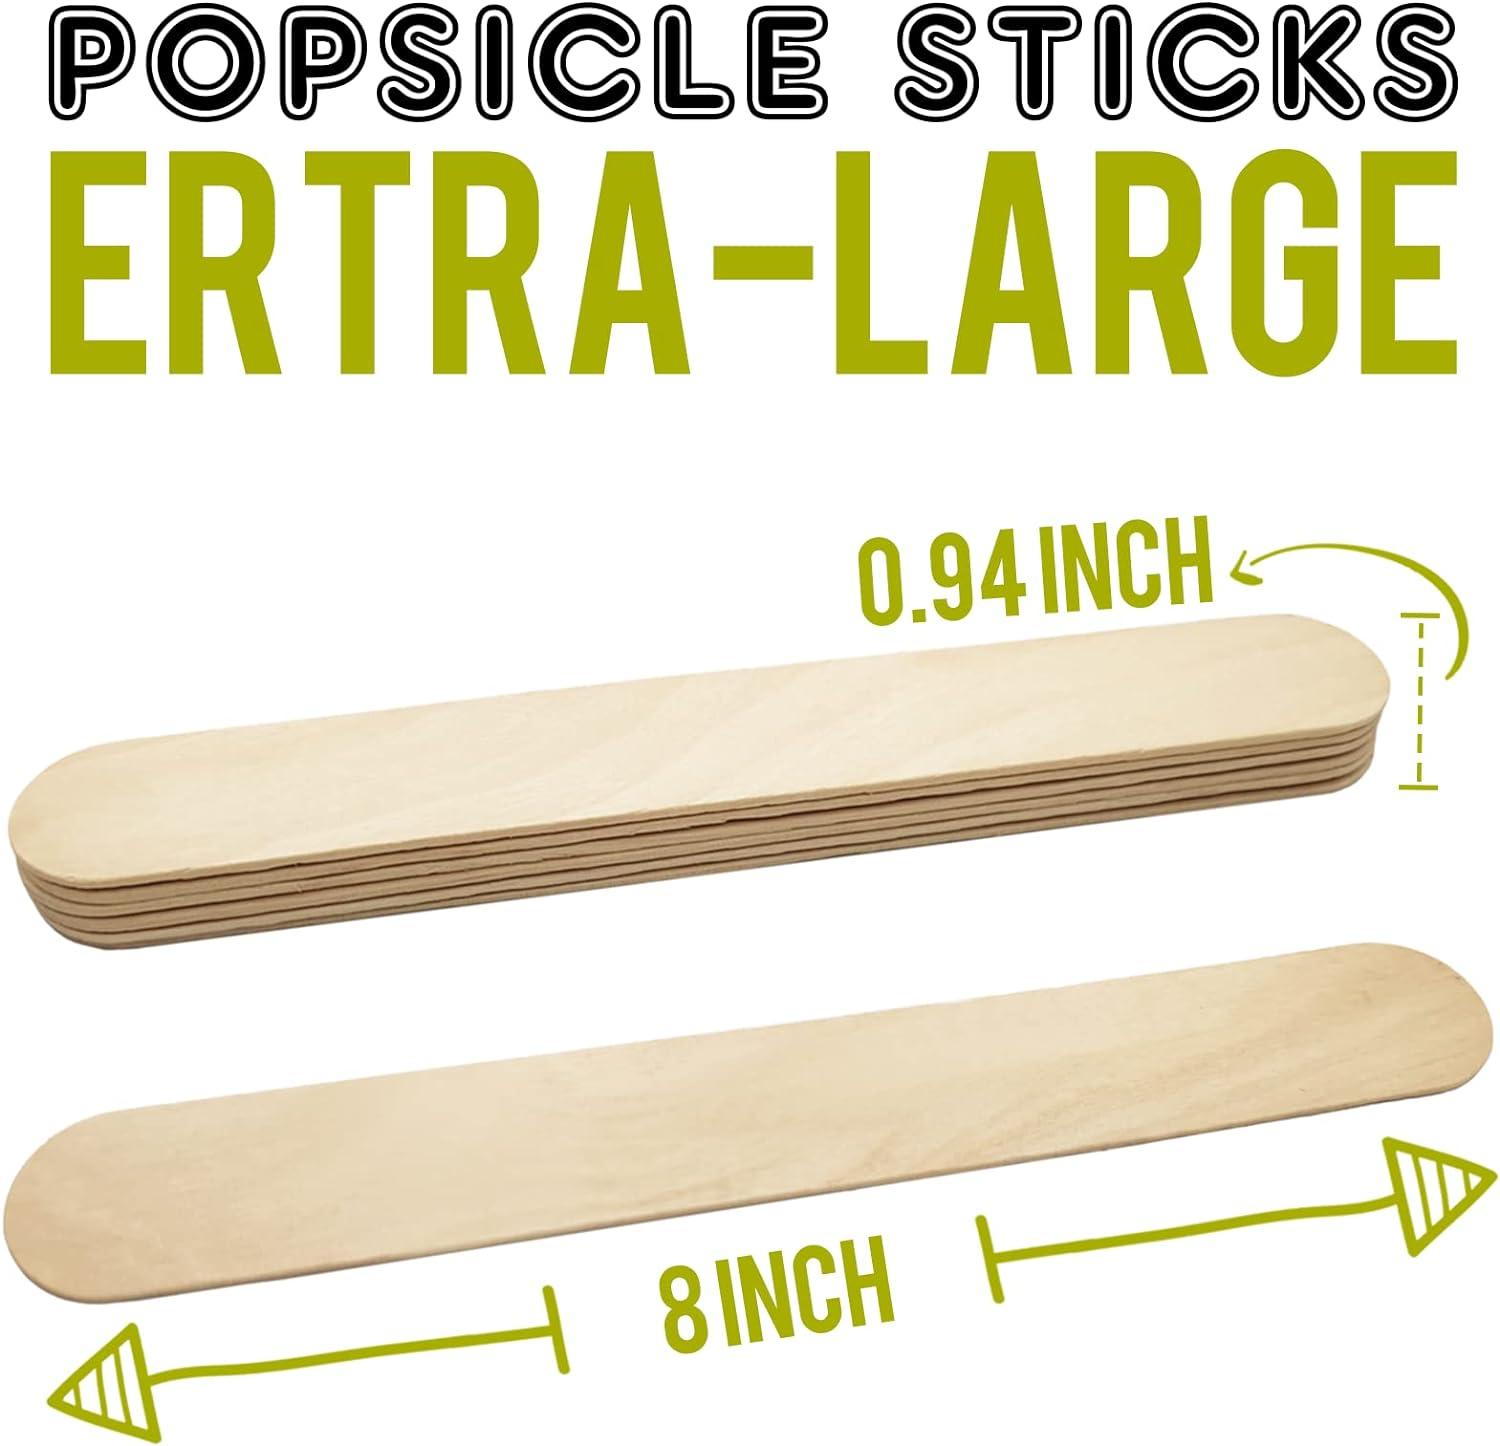 100 Sticks Jumbo Wood Craft Popsicle Sticks 6 Inch (Black) Black 100 Sticks